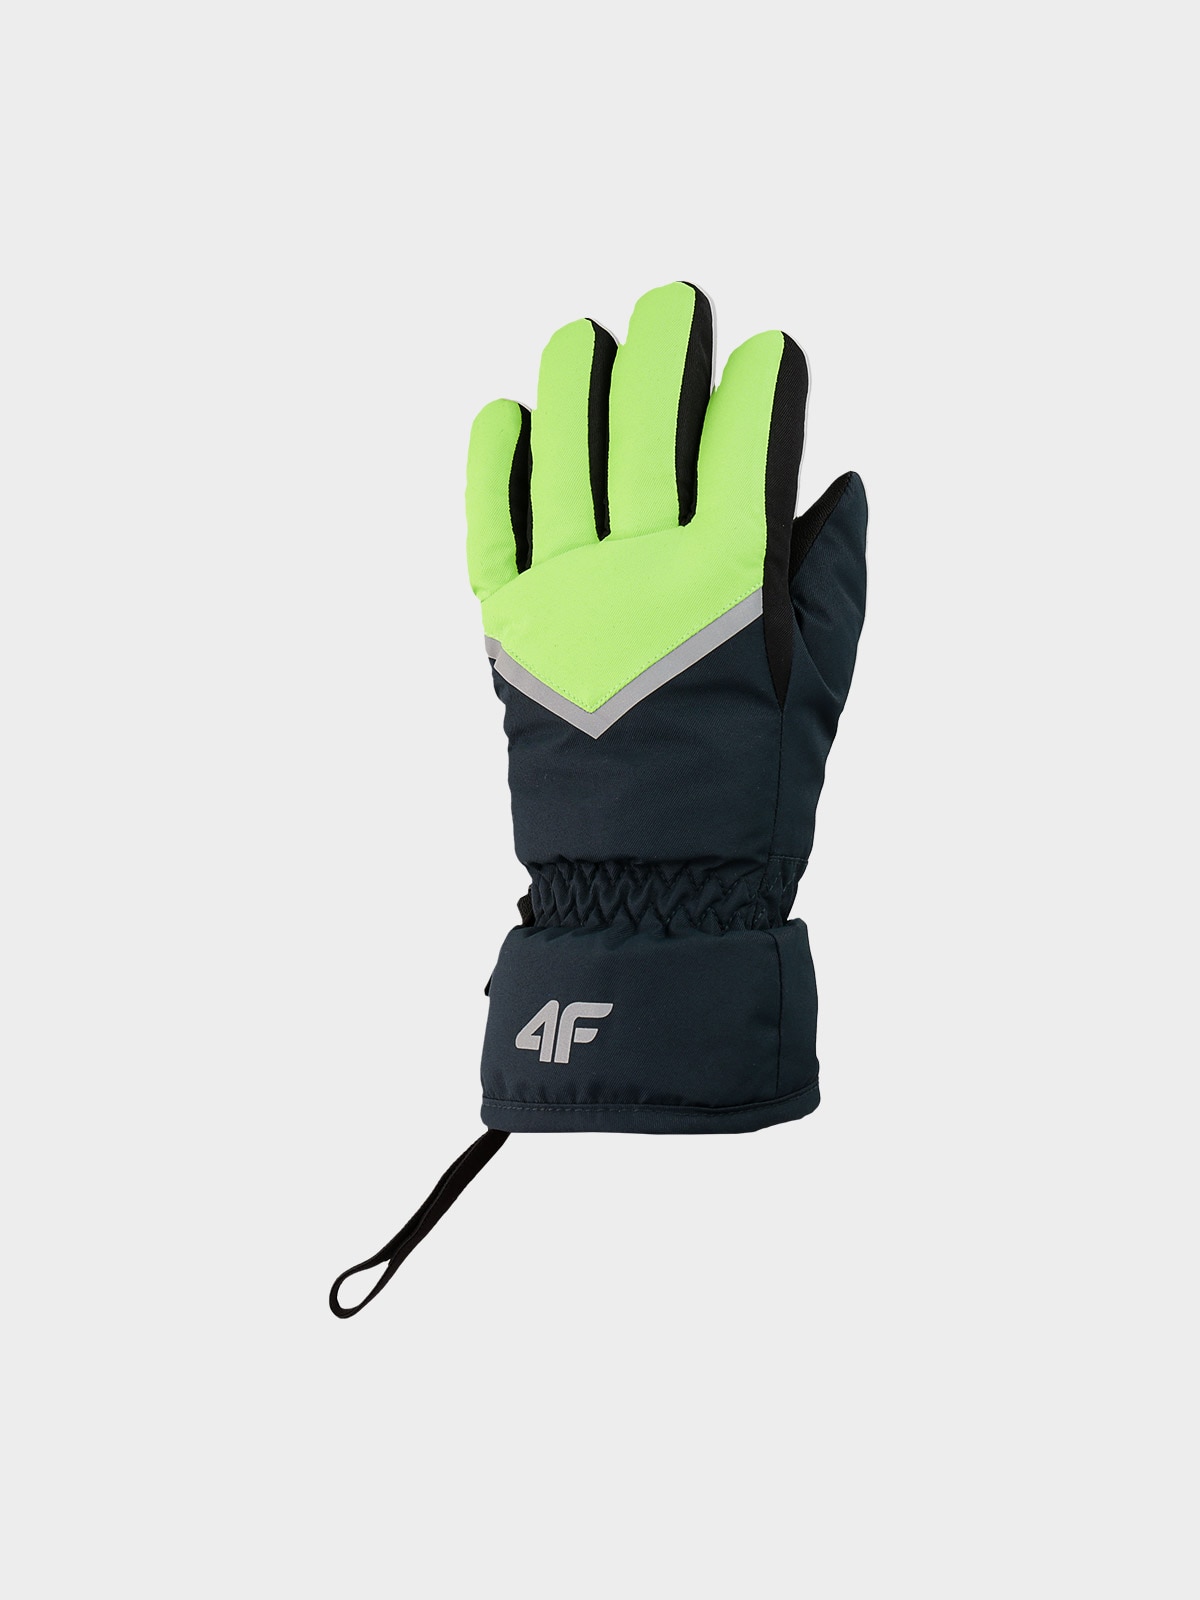 Chlapecké lyžařské rukavice Thinsulate© - zelené